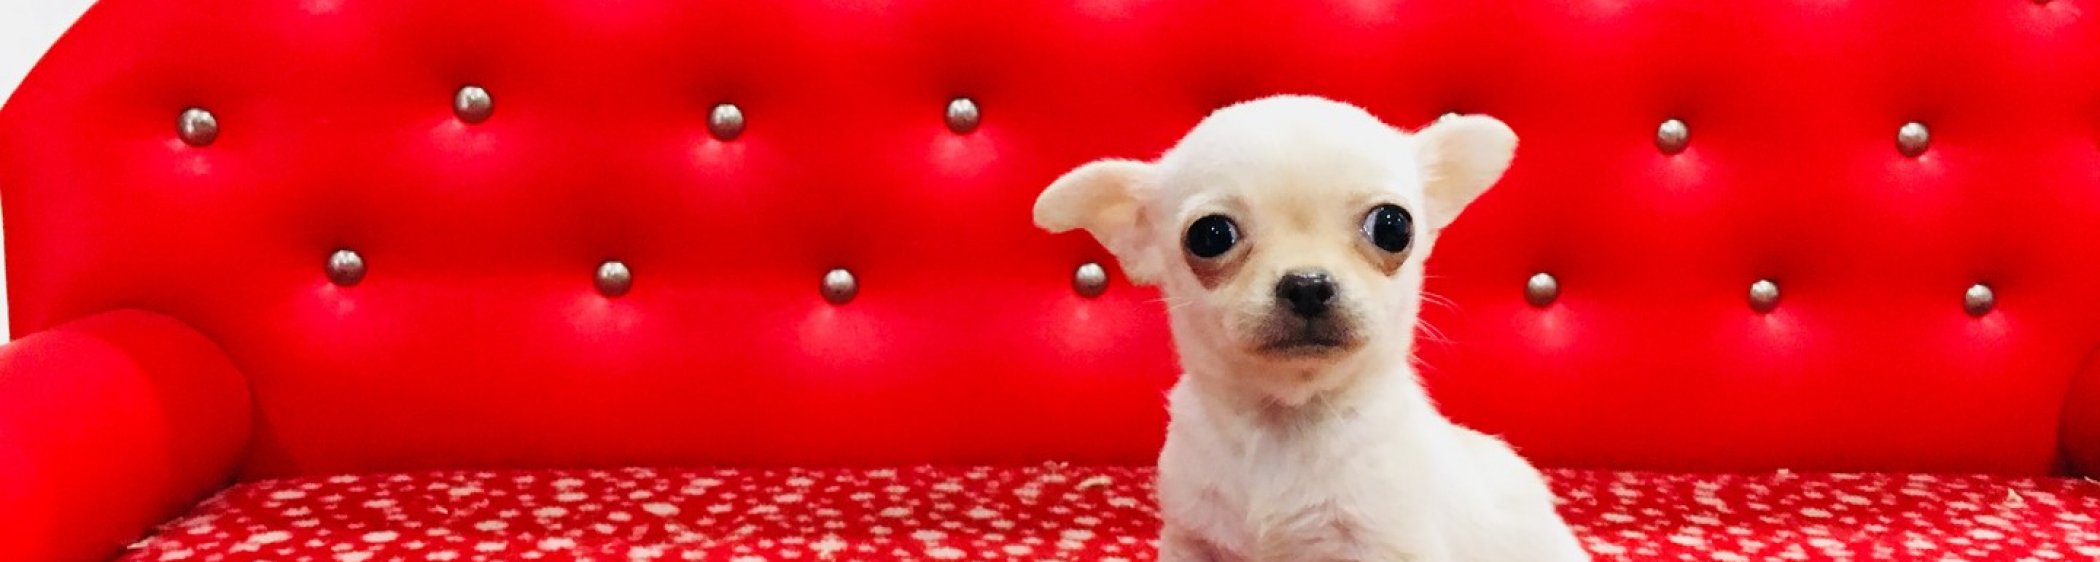 Chihuahua Yavru resmi